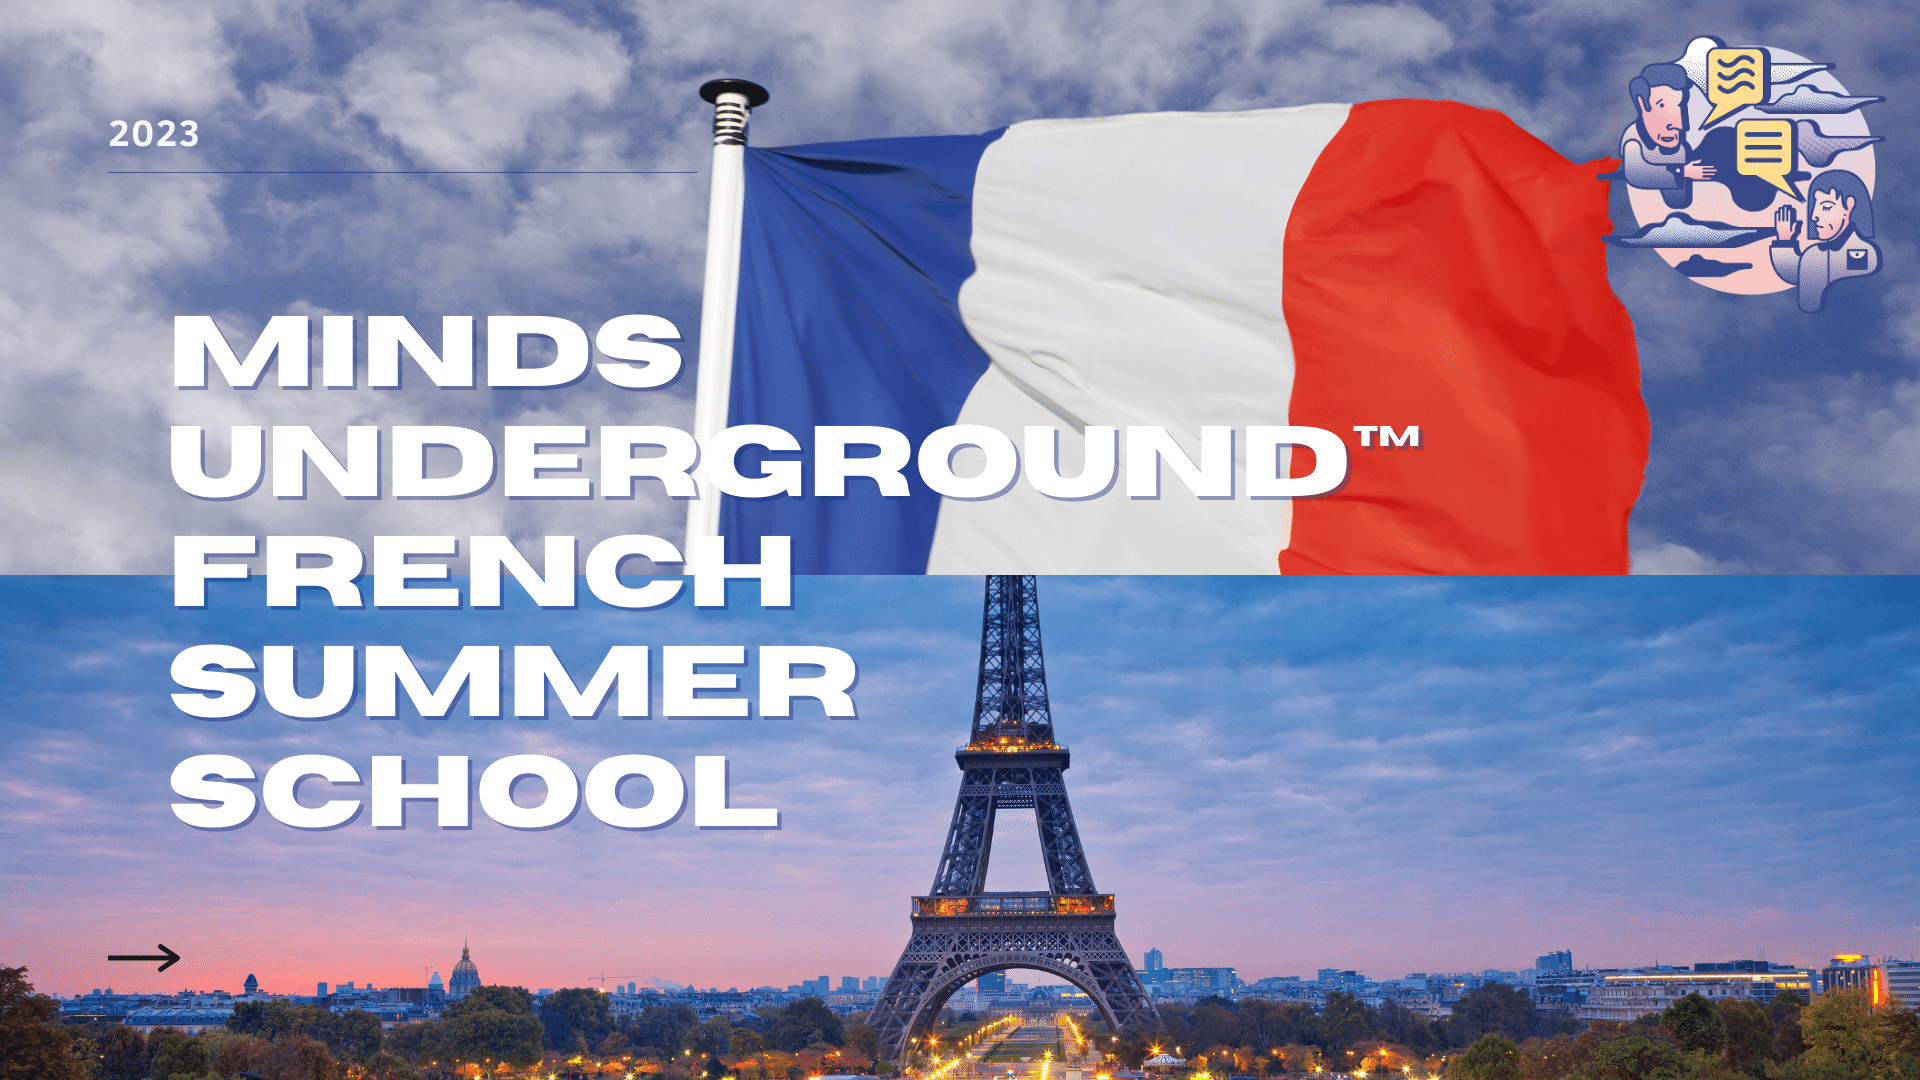 Minds Underground French Summer School 2023.png